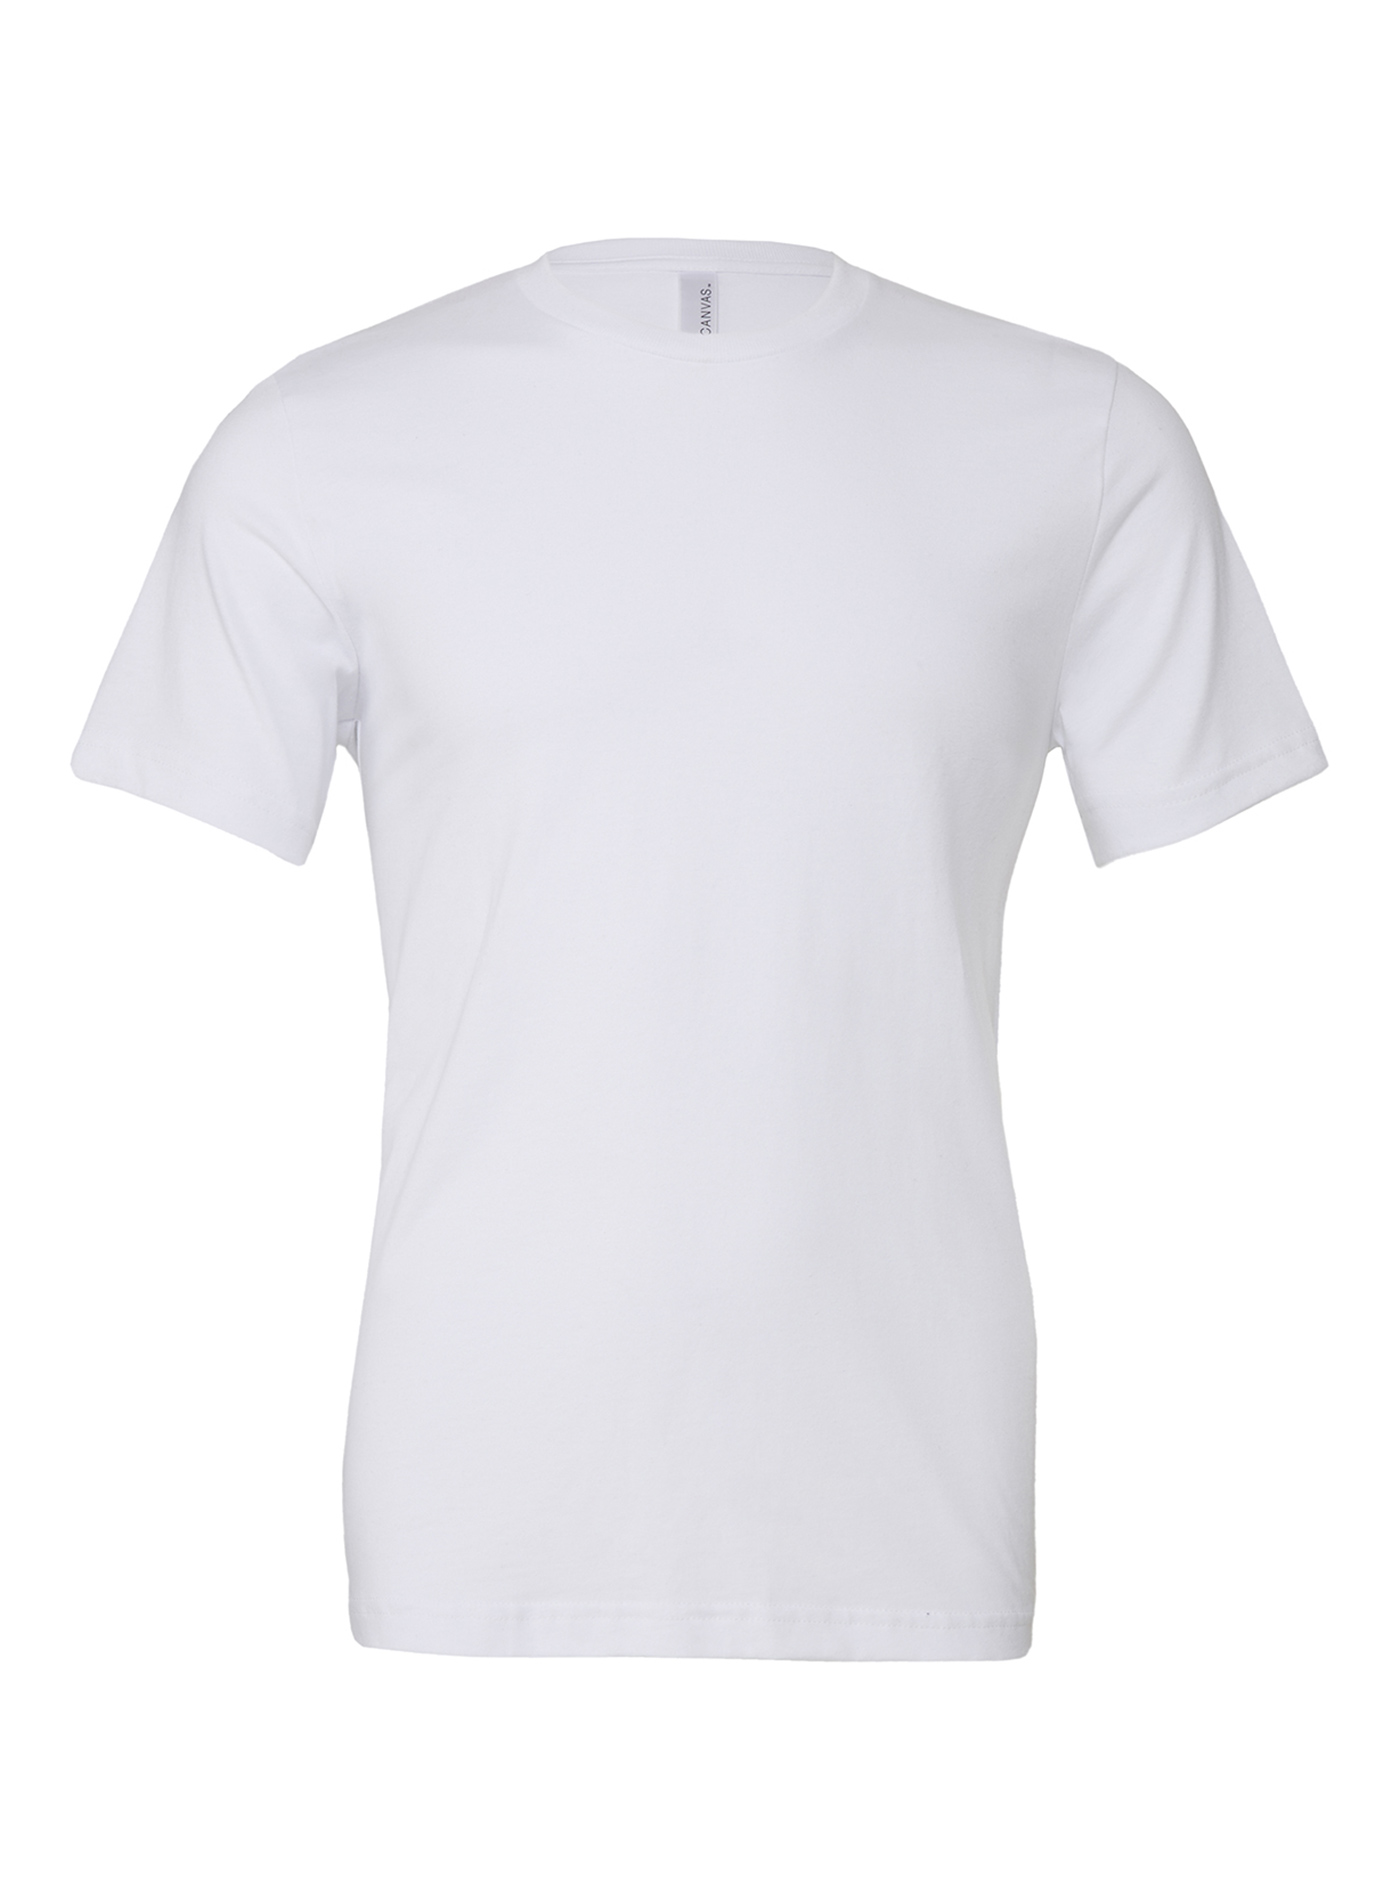 Unisex tričko Bella + Canvas Jersey - Bílá S